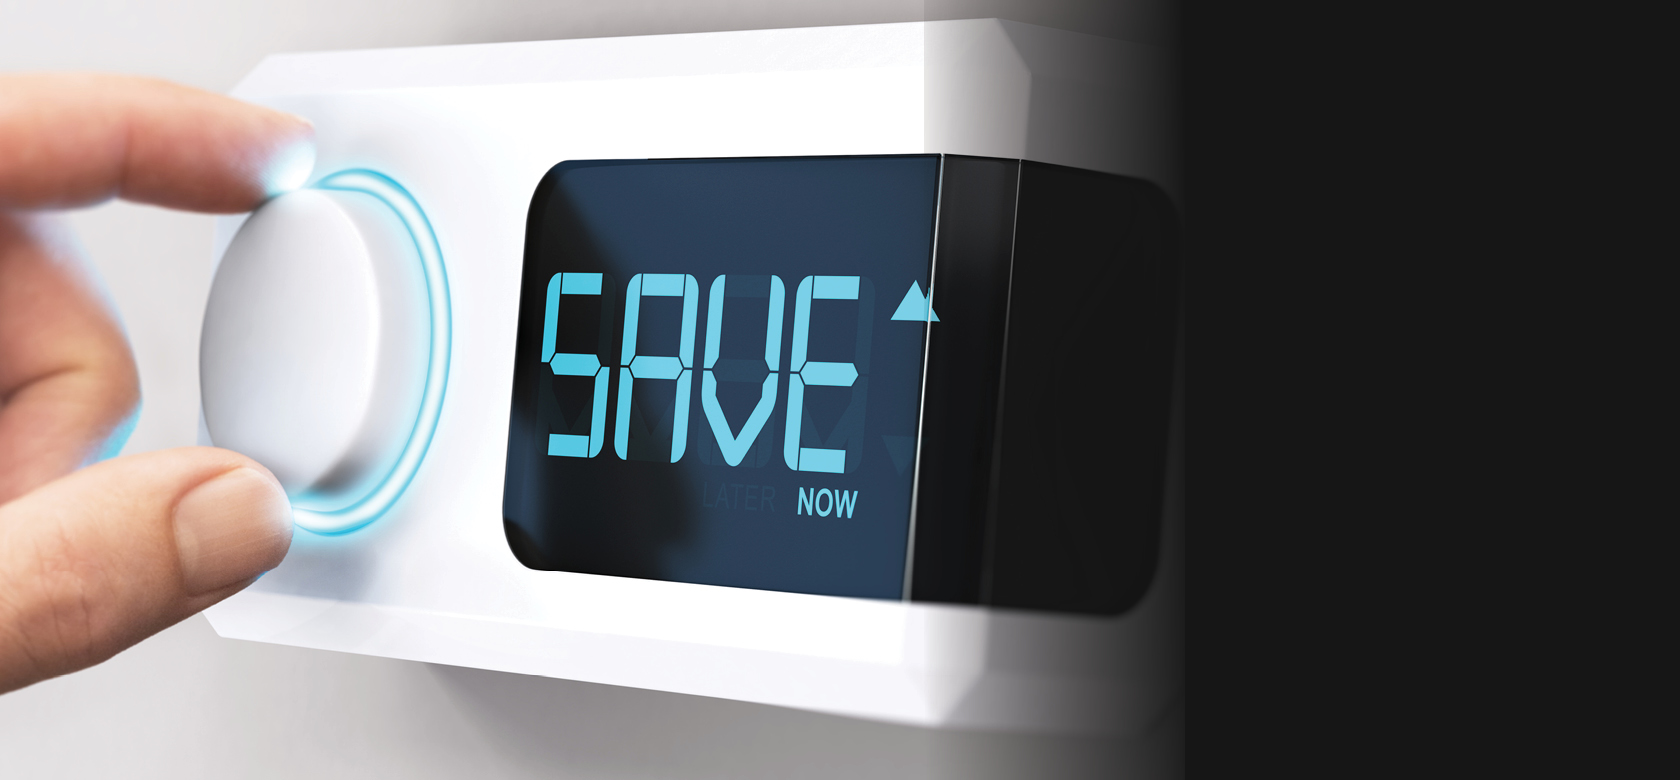 Image of energy saving home device